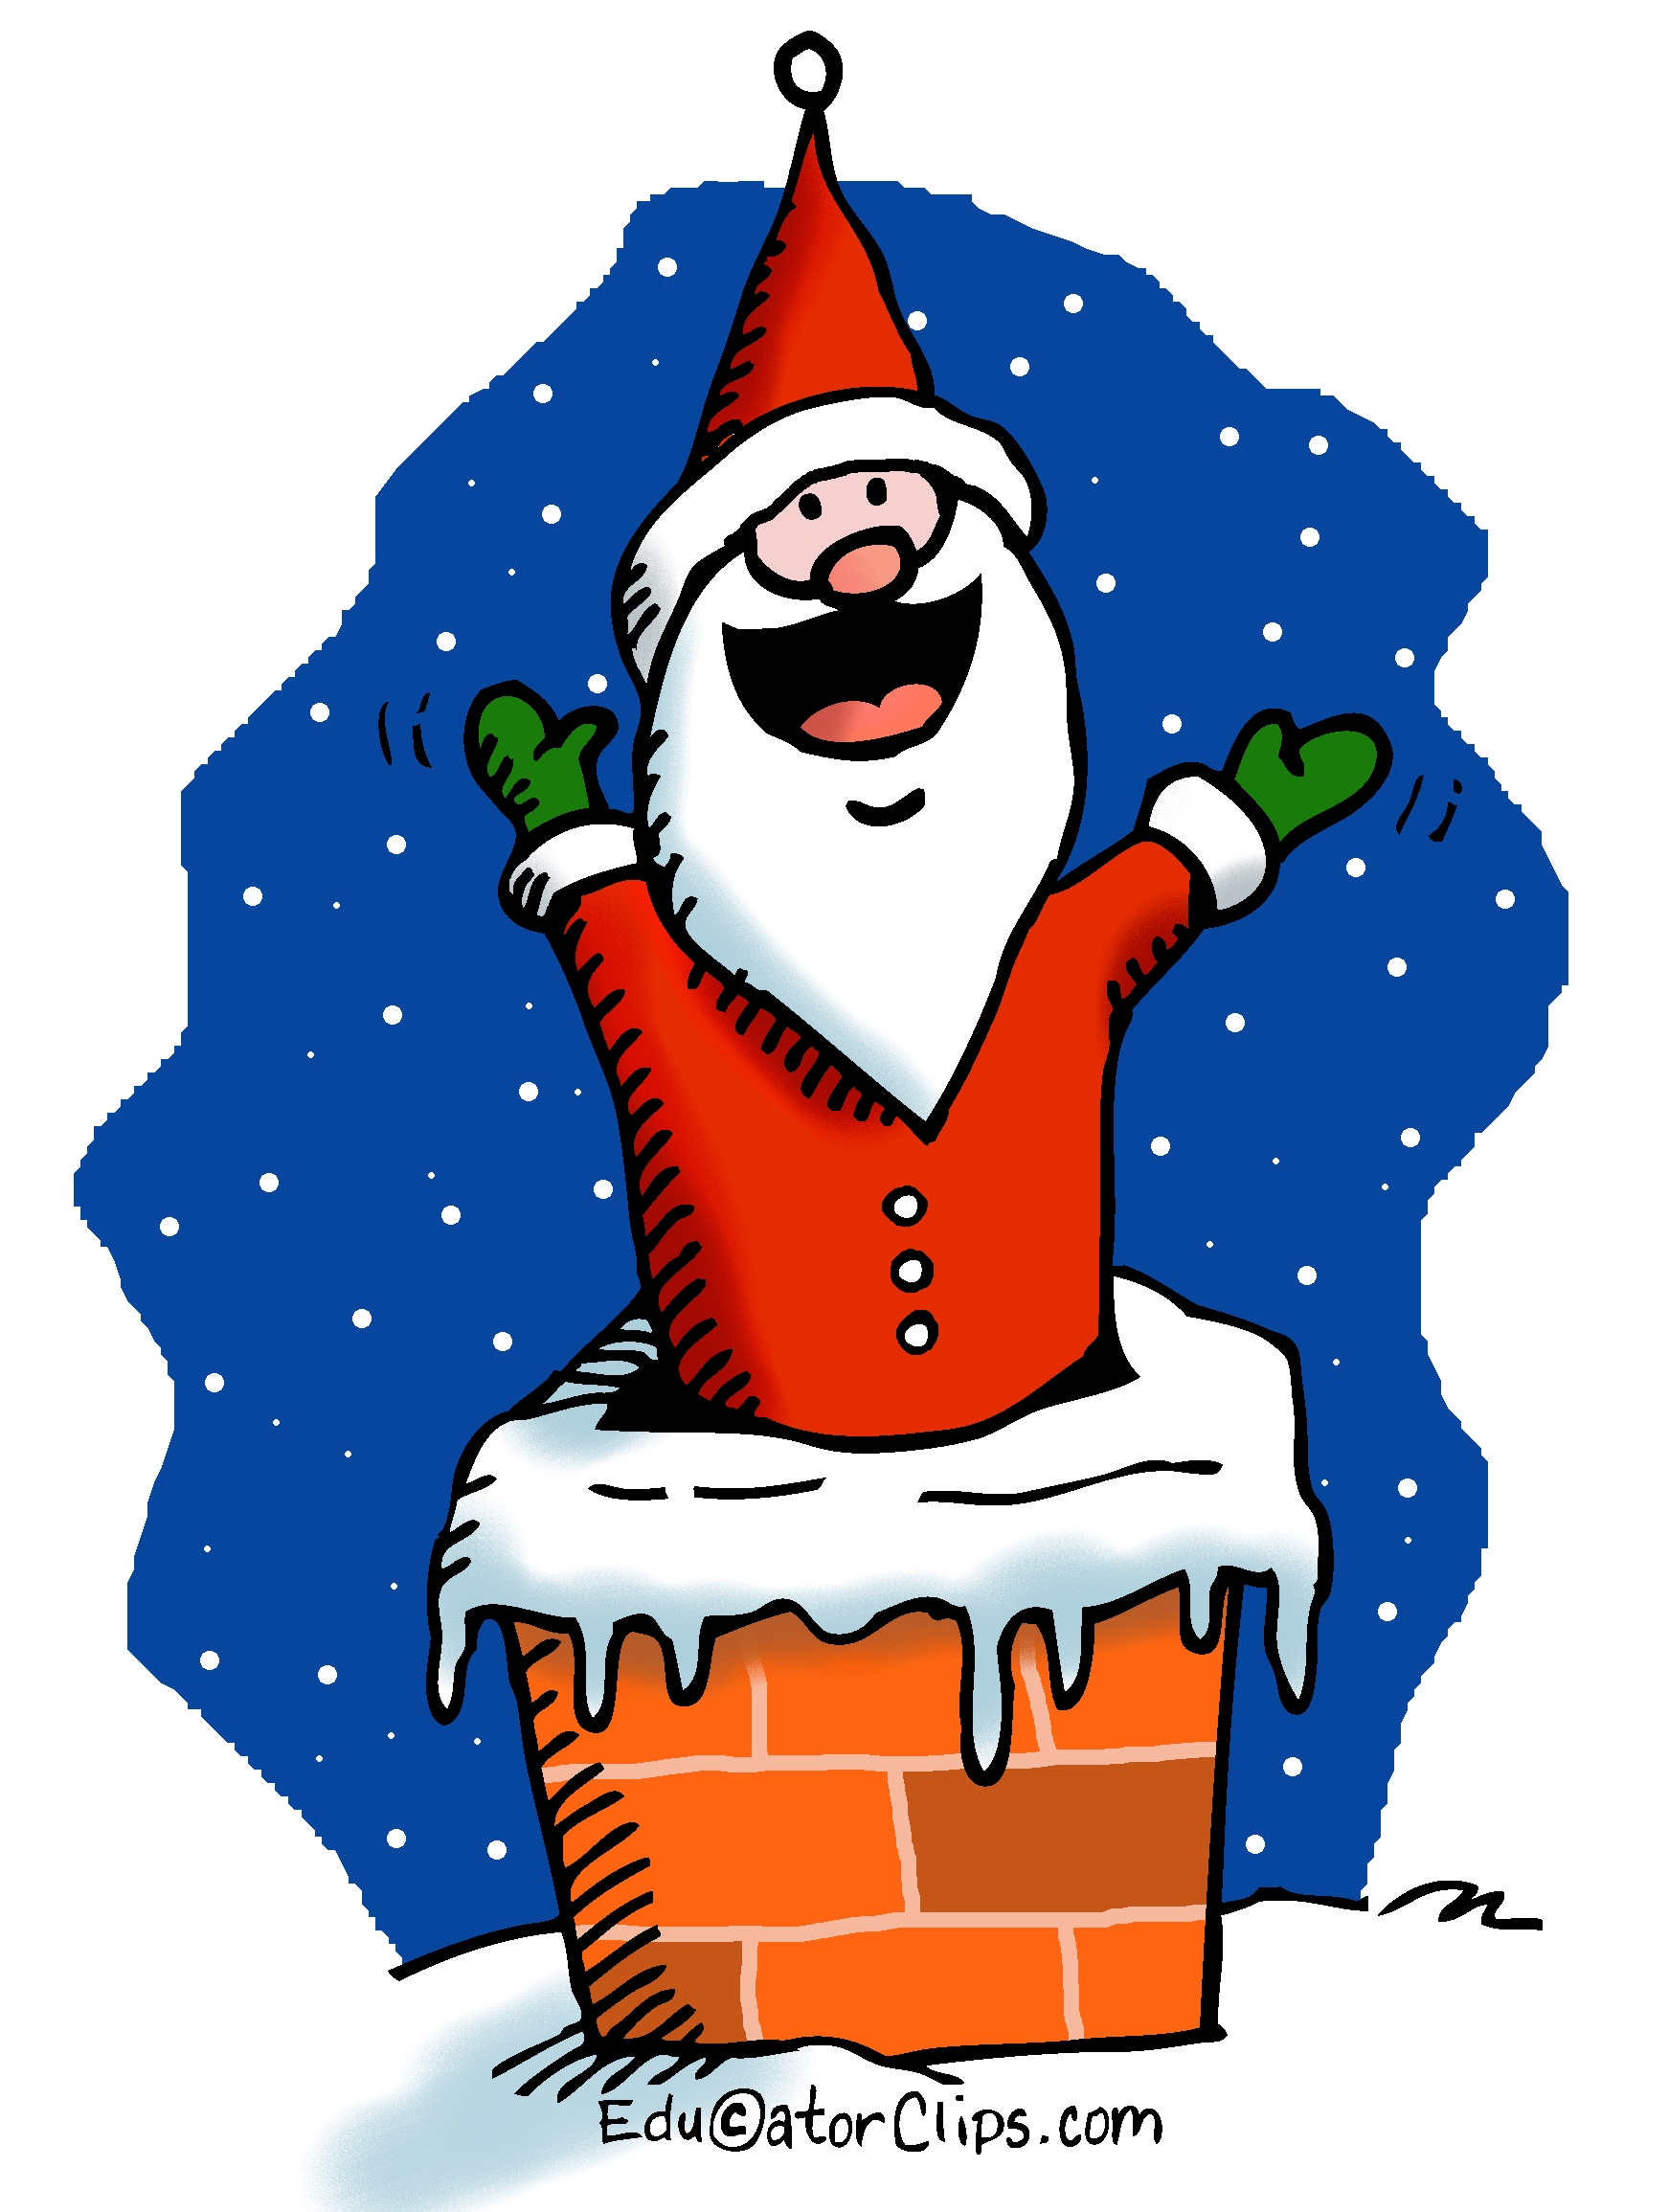 Happy Santa Clip Art,#santa,#santaclipart,#teacherclipart,#christmas